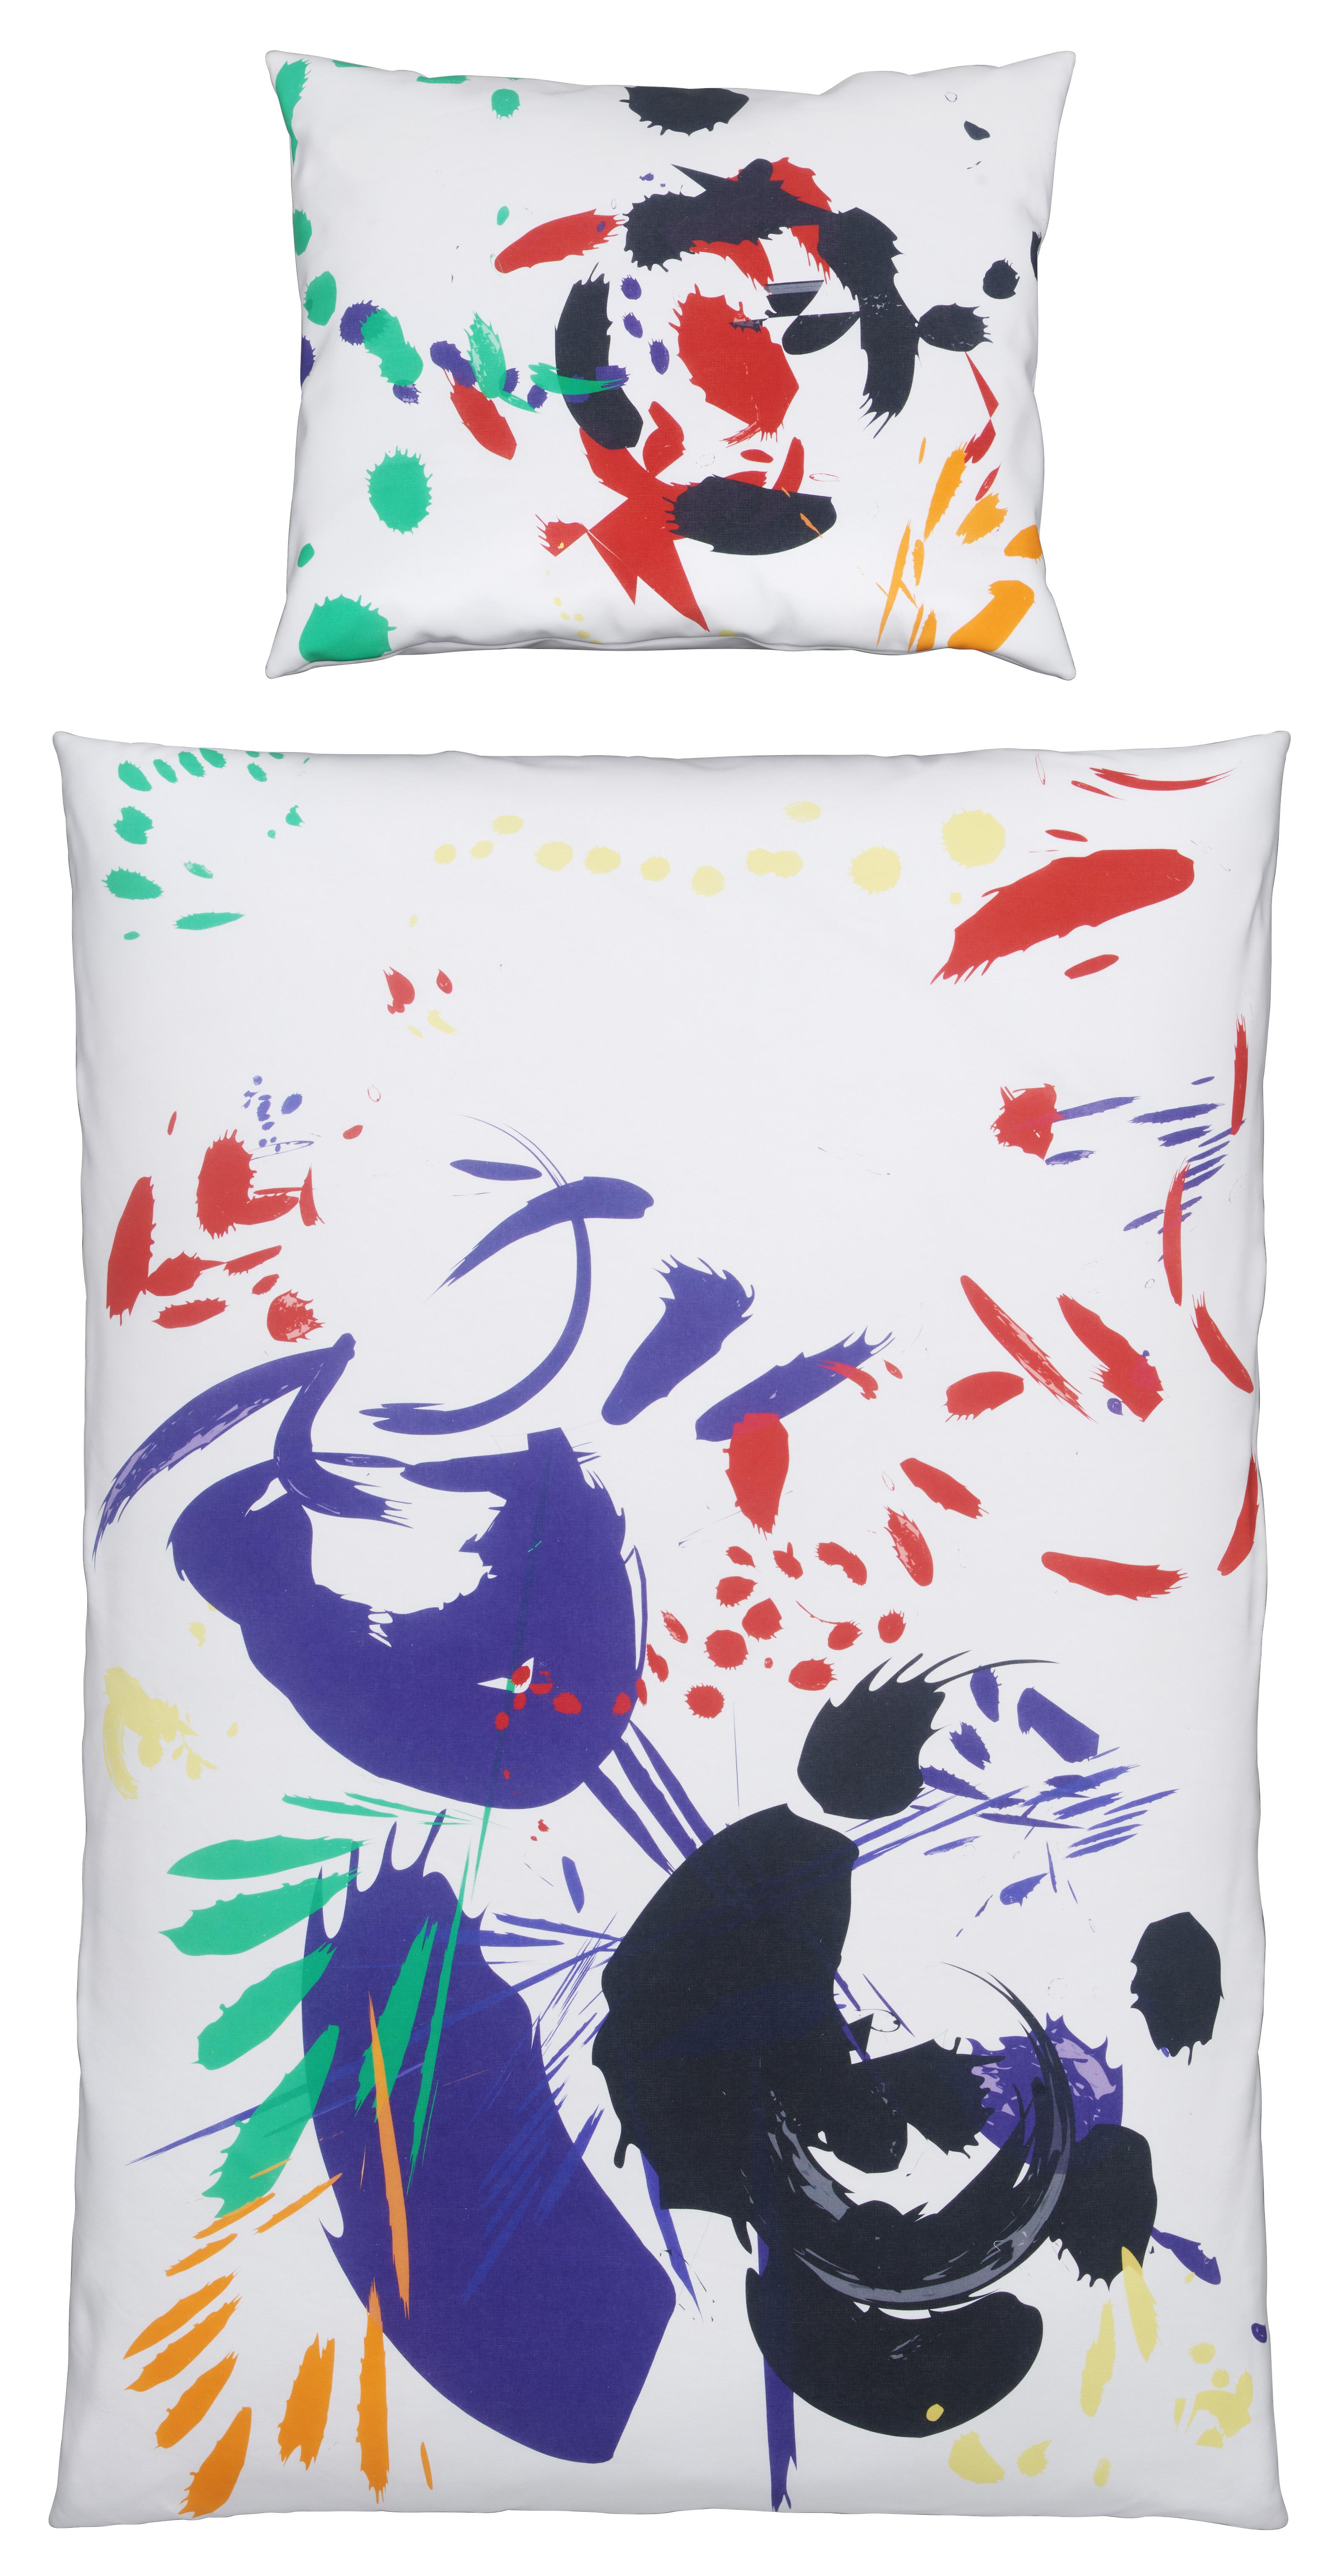 Wendebettwäsche Lenja in Multicolor ca. 135x200cm - Multicolor, KONVENTIONELL, Textil (135/200cm) - Bessagi Home